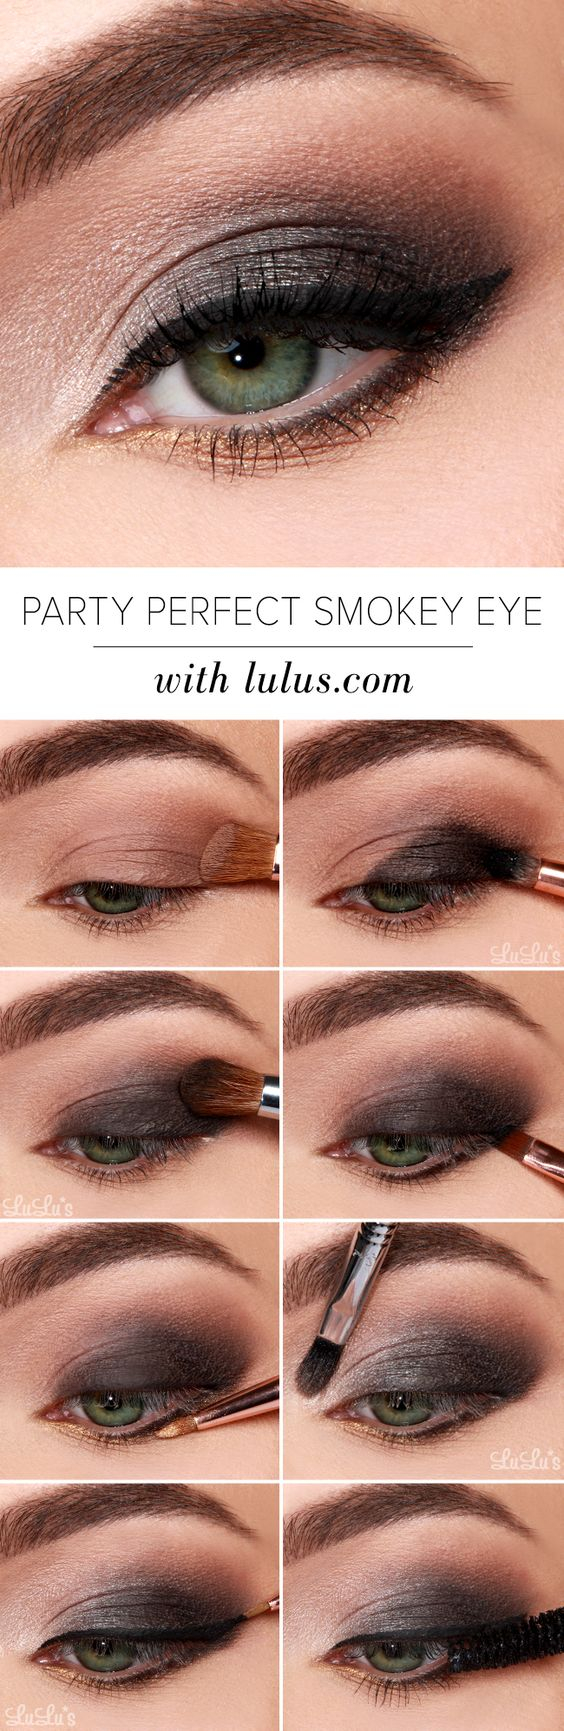 Night Party Eye Makeup 40 Hottest Smokey Eye Makeup Ideas 2019 Smokey Eye Tutorials For